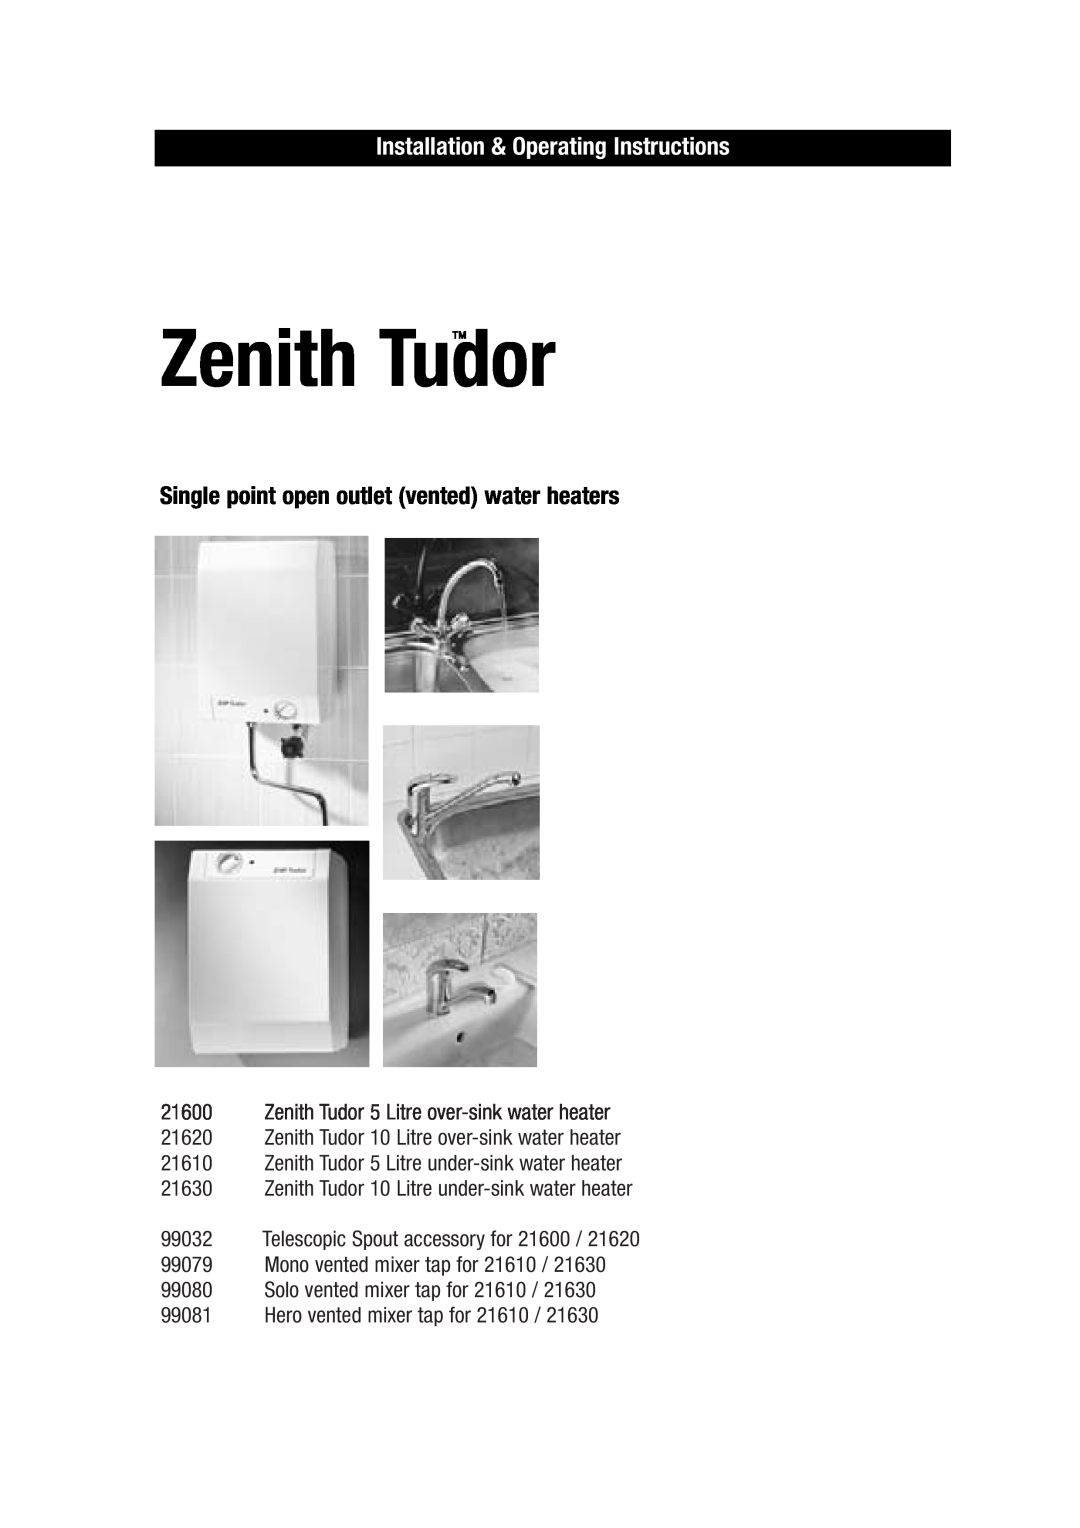 Zenith 216666666 operating instructions Installation & Operating Instructions, Zenith Tudorä 